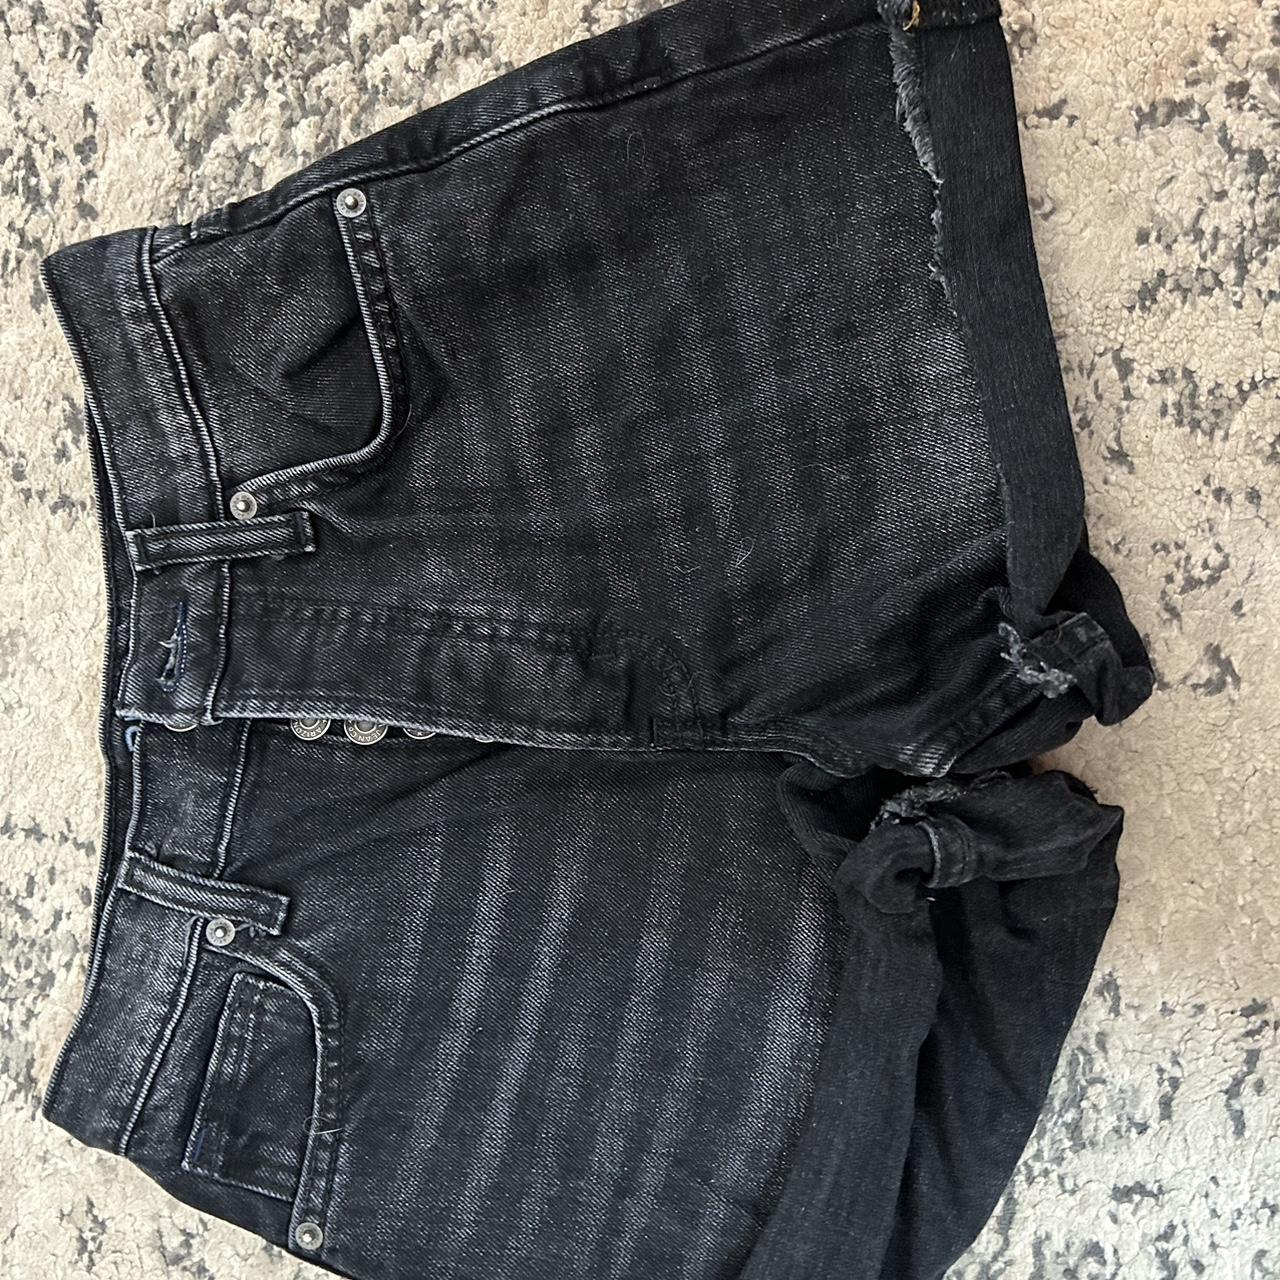 Black denim high rise shorts size 1. $10 OBO - Depop